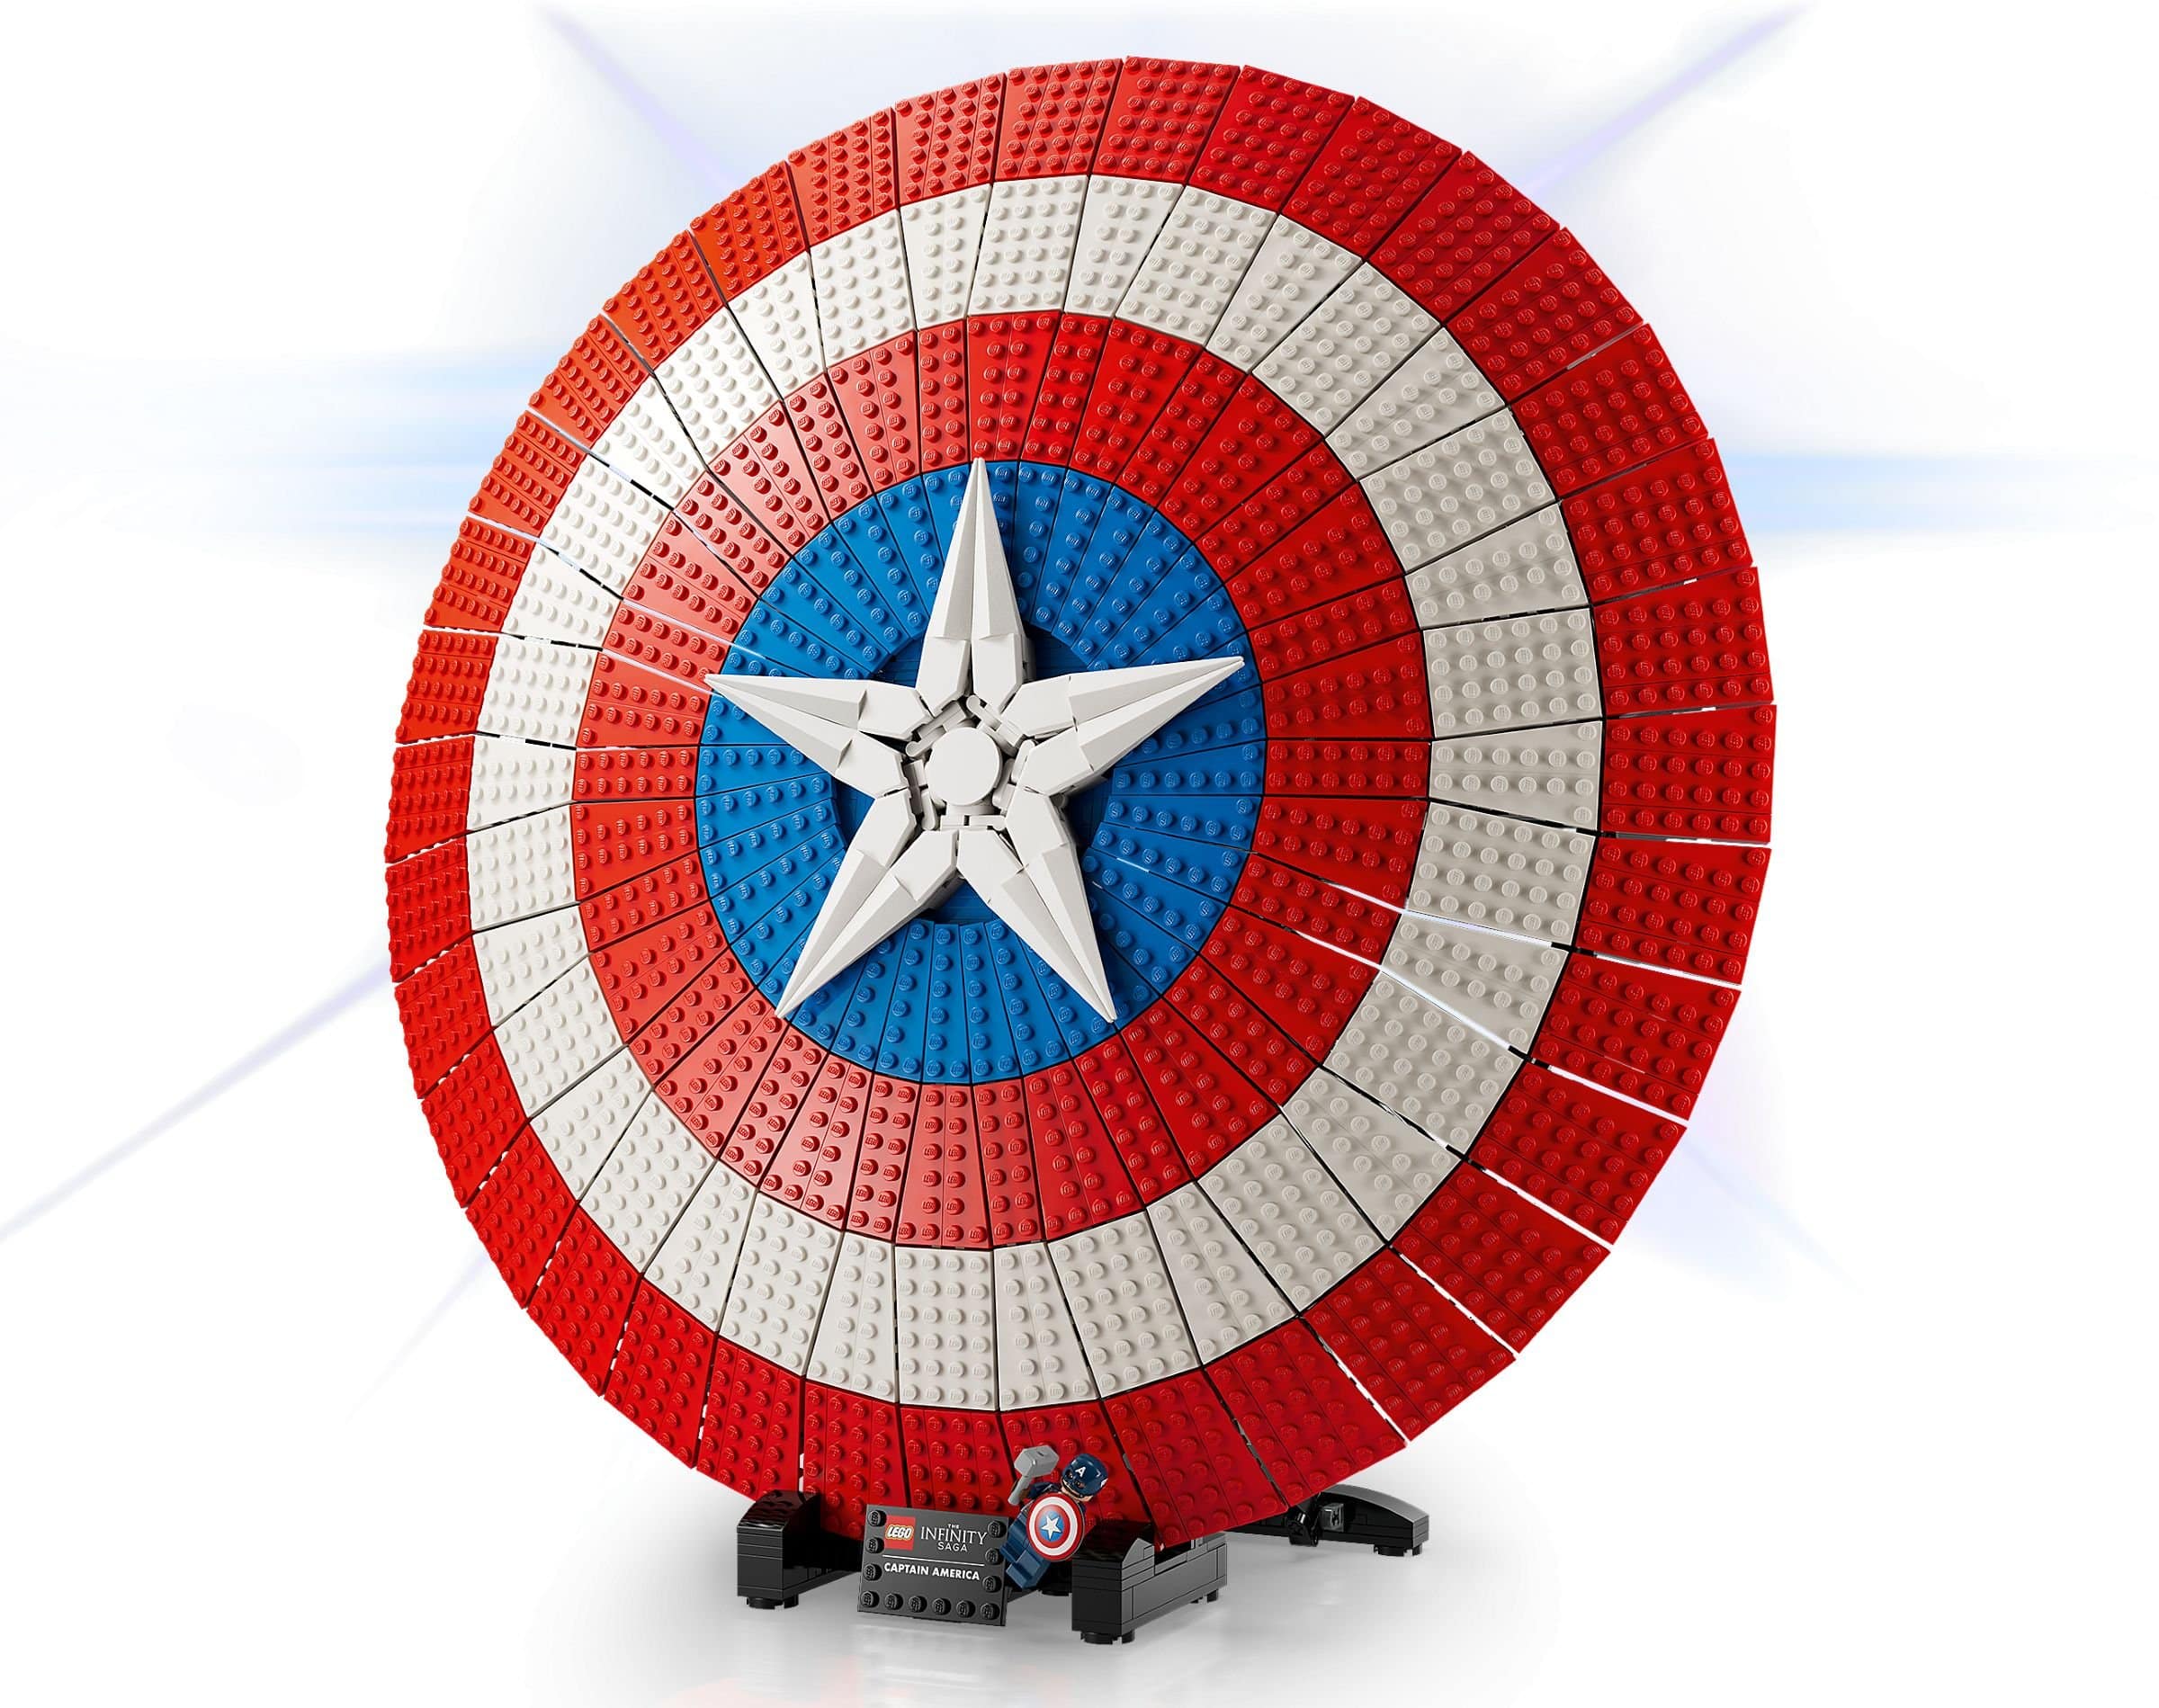 LEGO® Super Heroes 76262 Captain Americas Schild